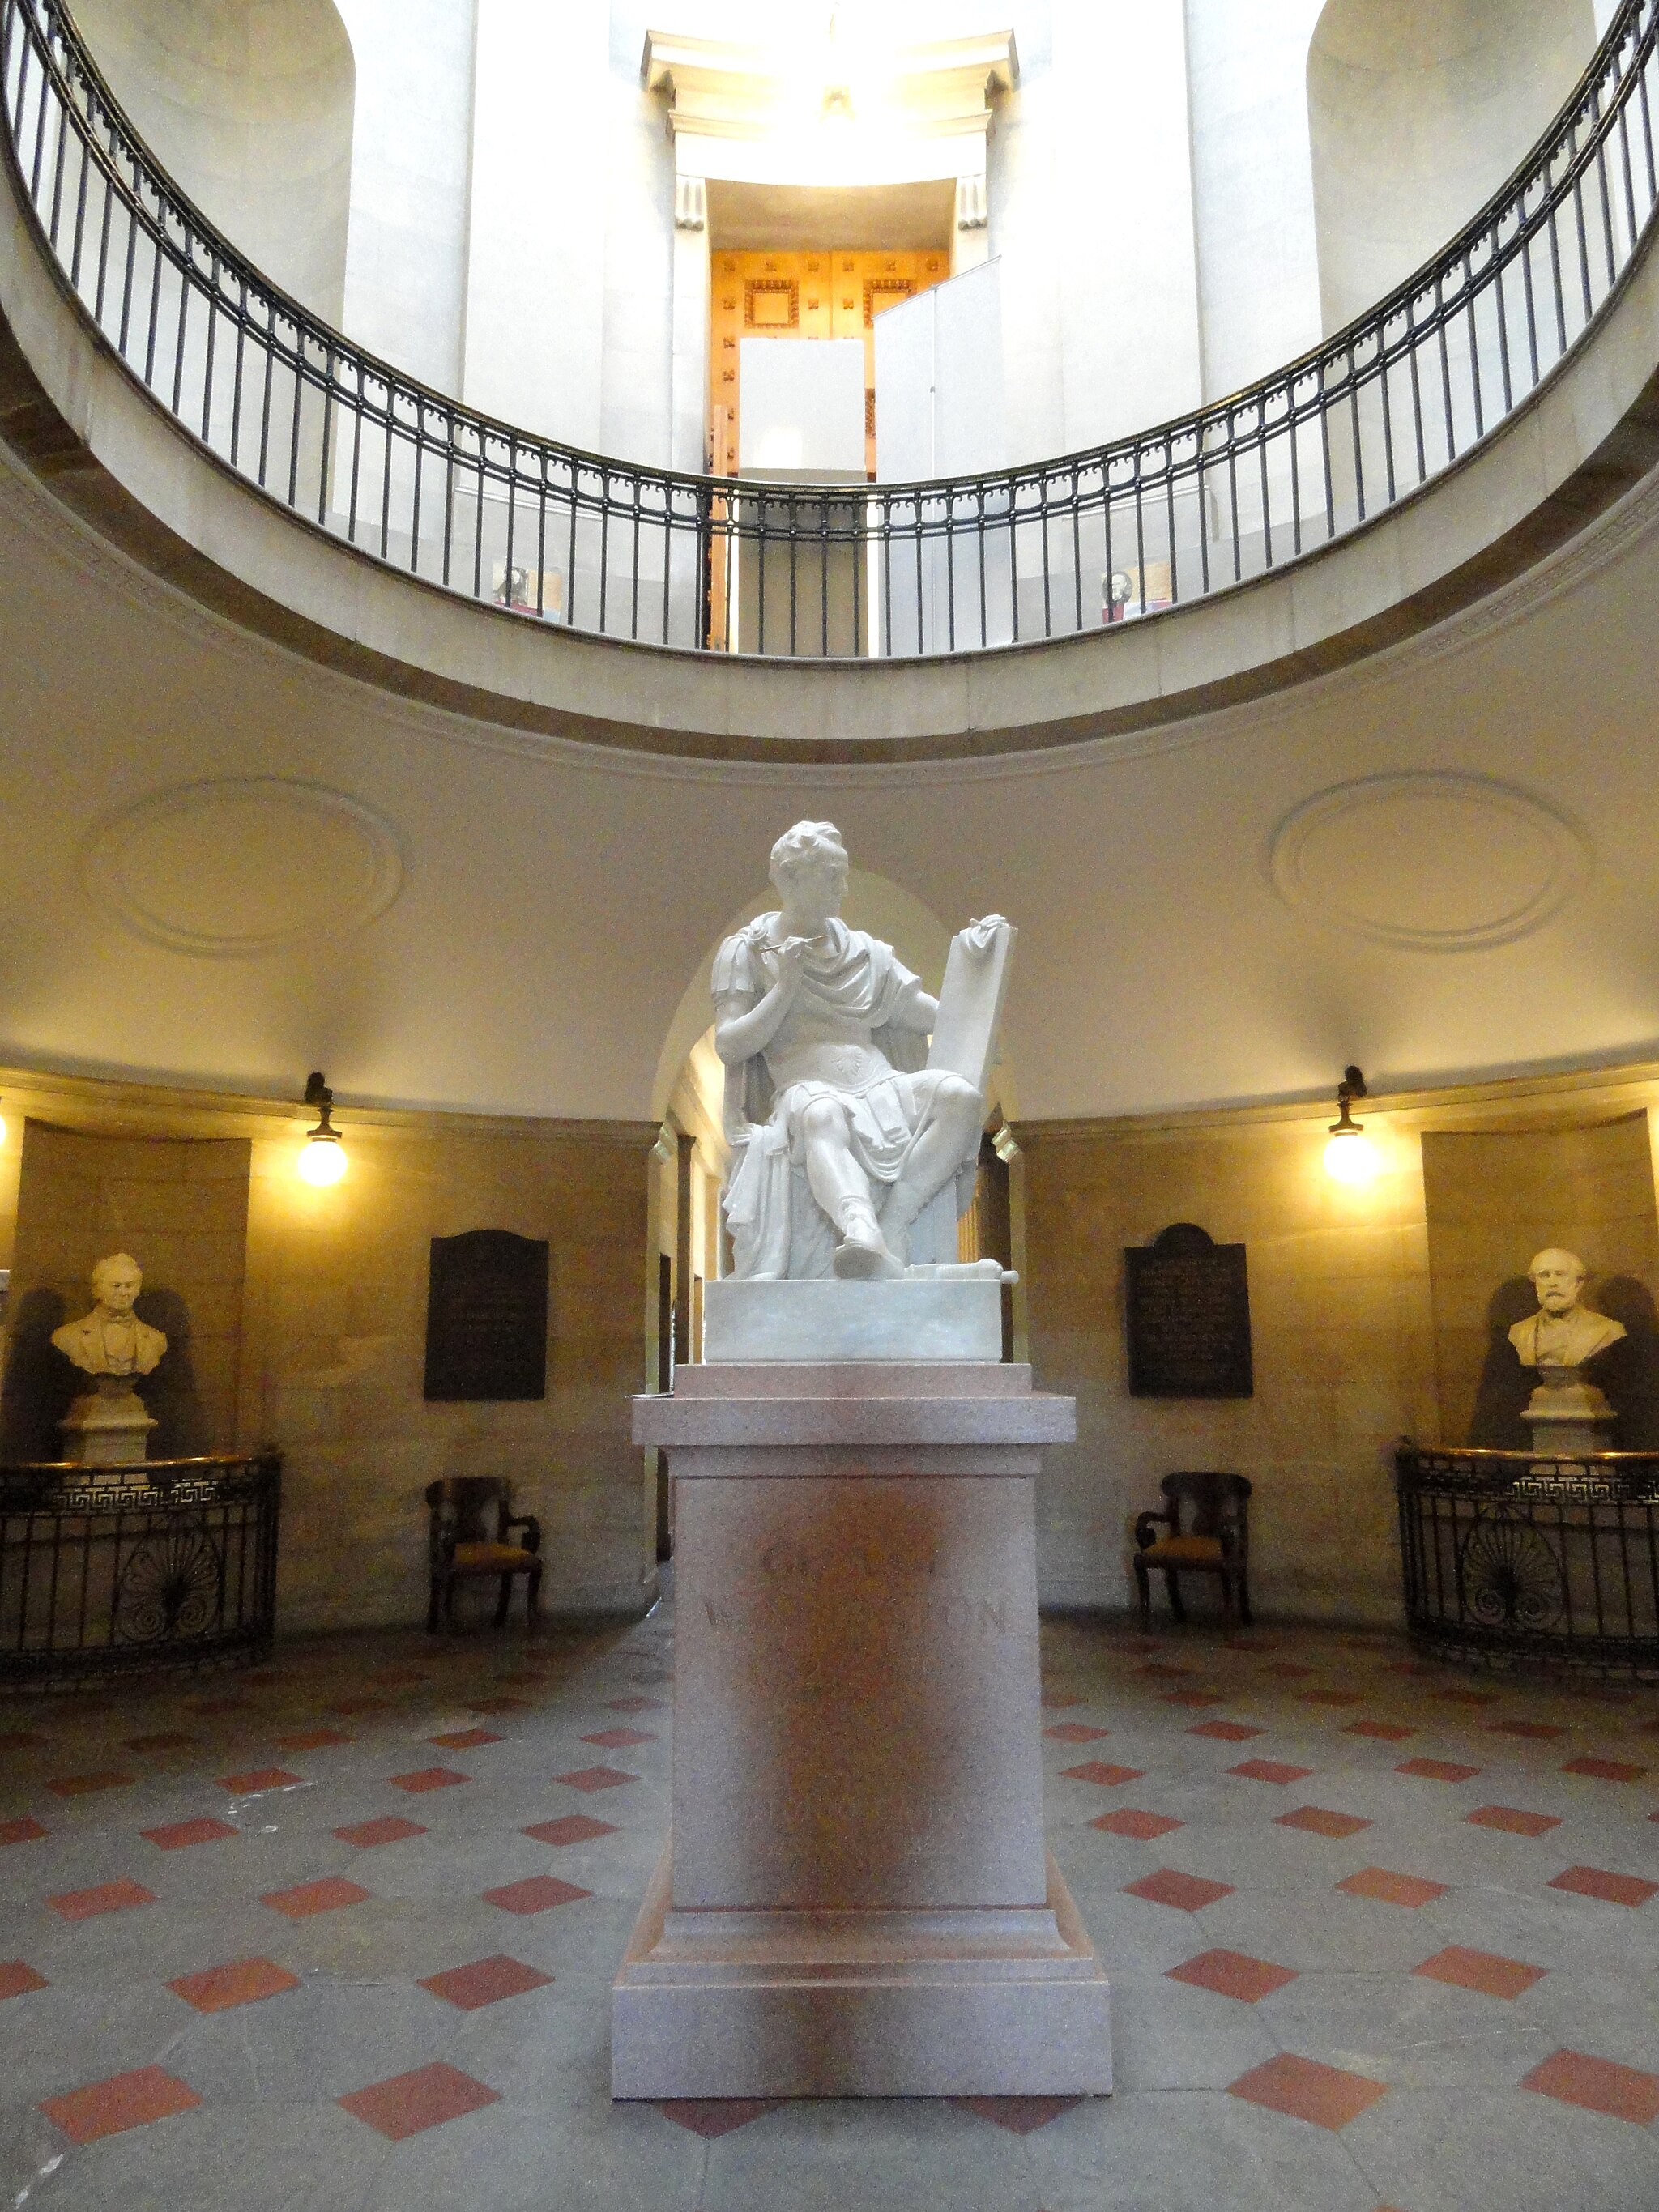 Antonio Canova Sculpts George Washington. How did the Italian sculptor approach a portrait of the first US president